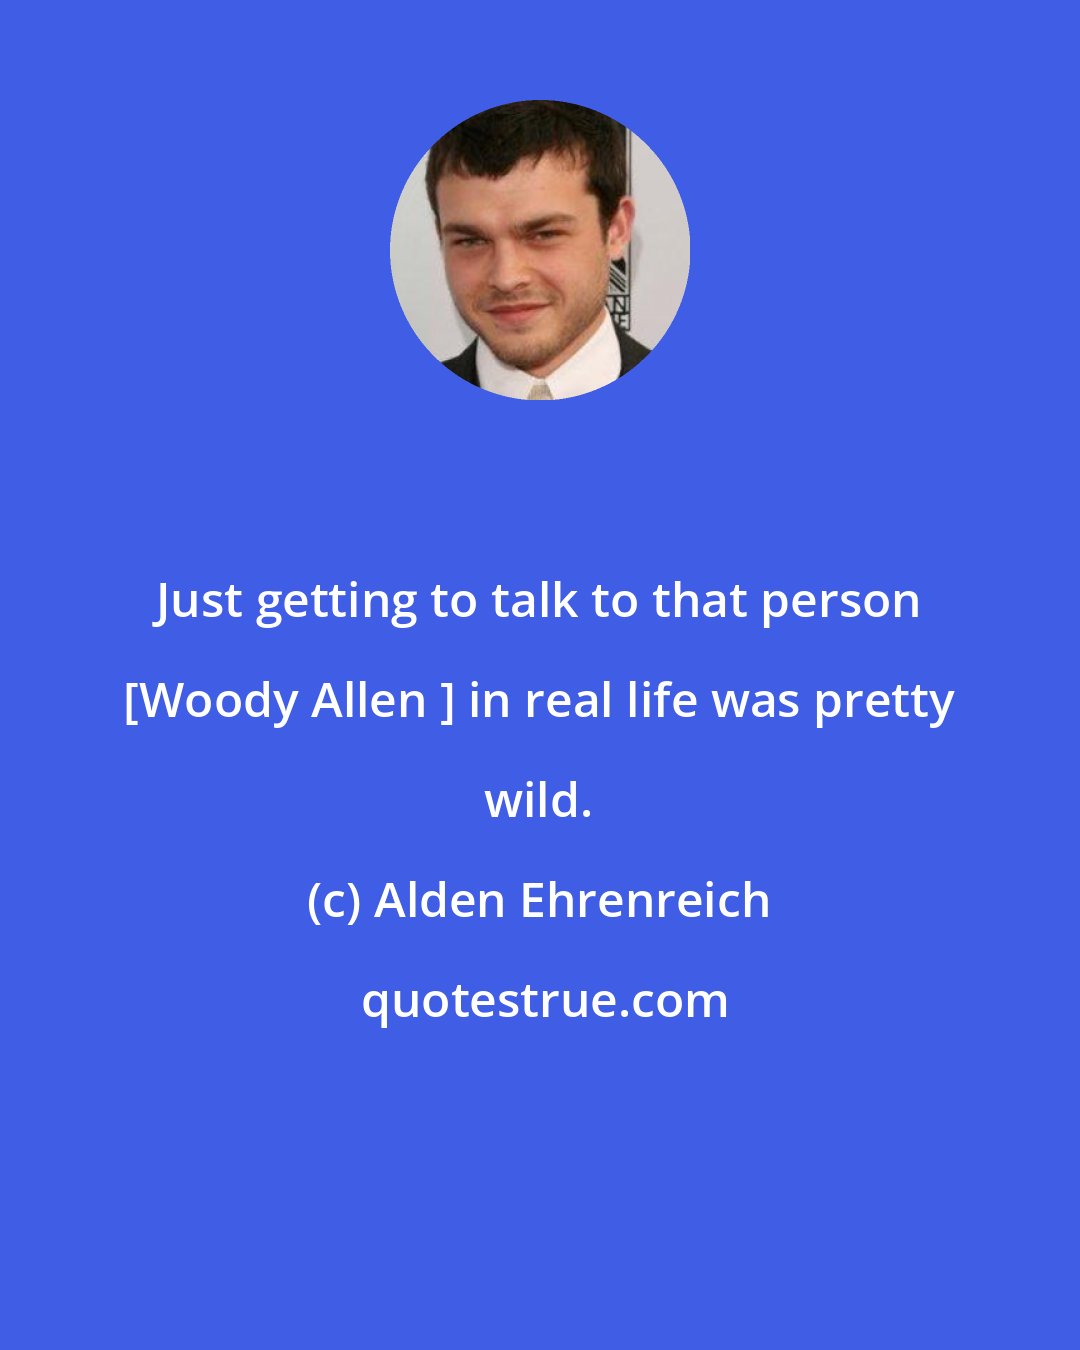 Alden Ehrenreich: Just getting to talk to that person [Woody Allen ] in real life was pretty wild.